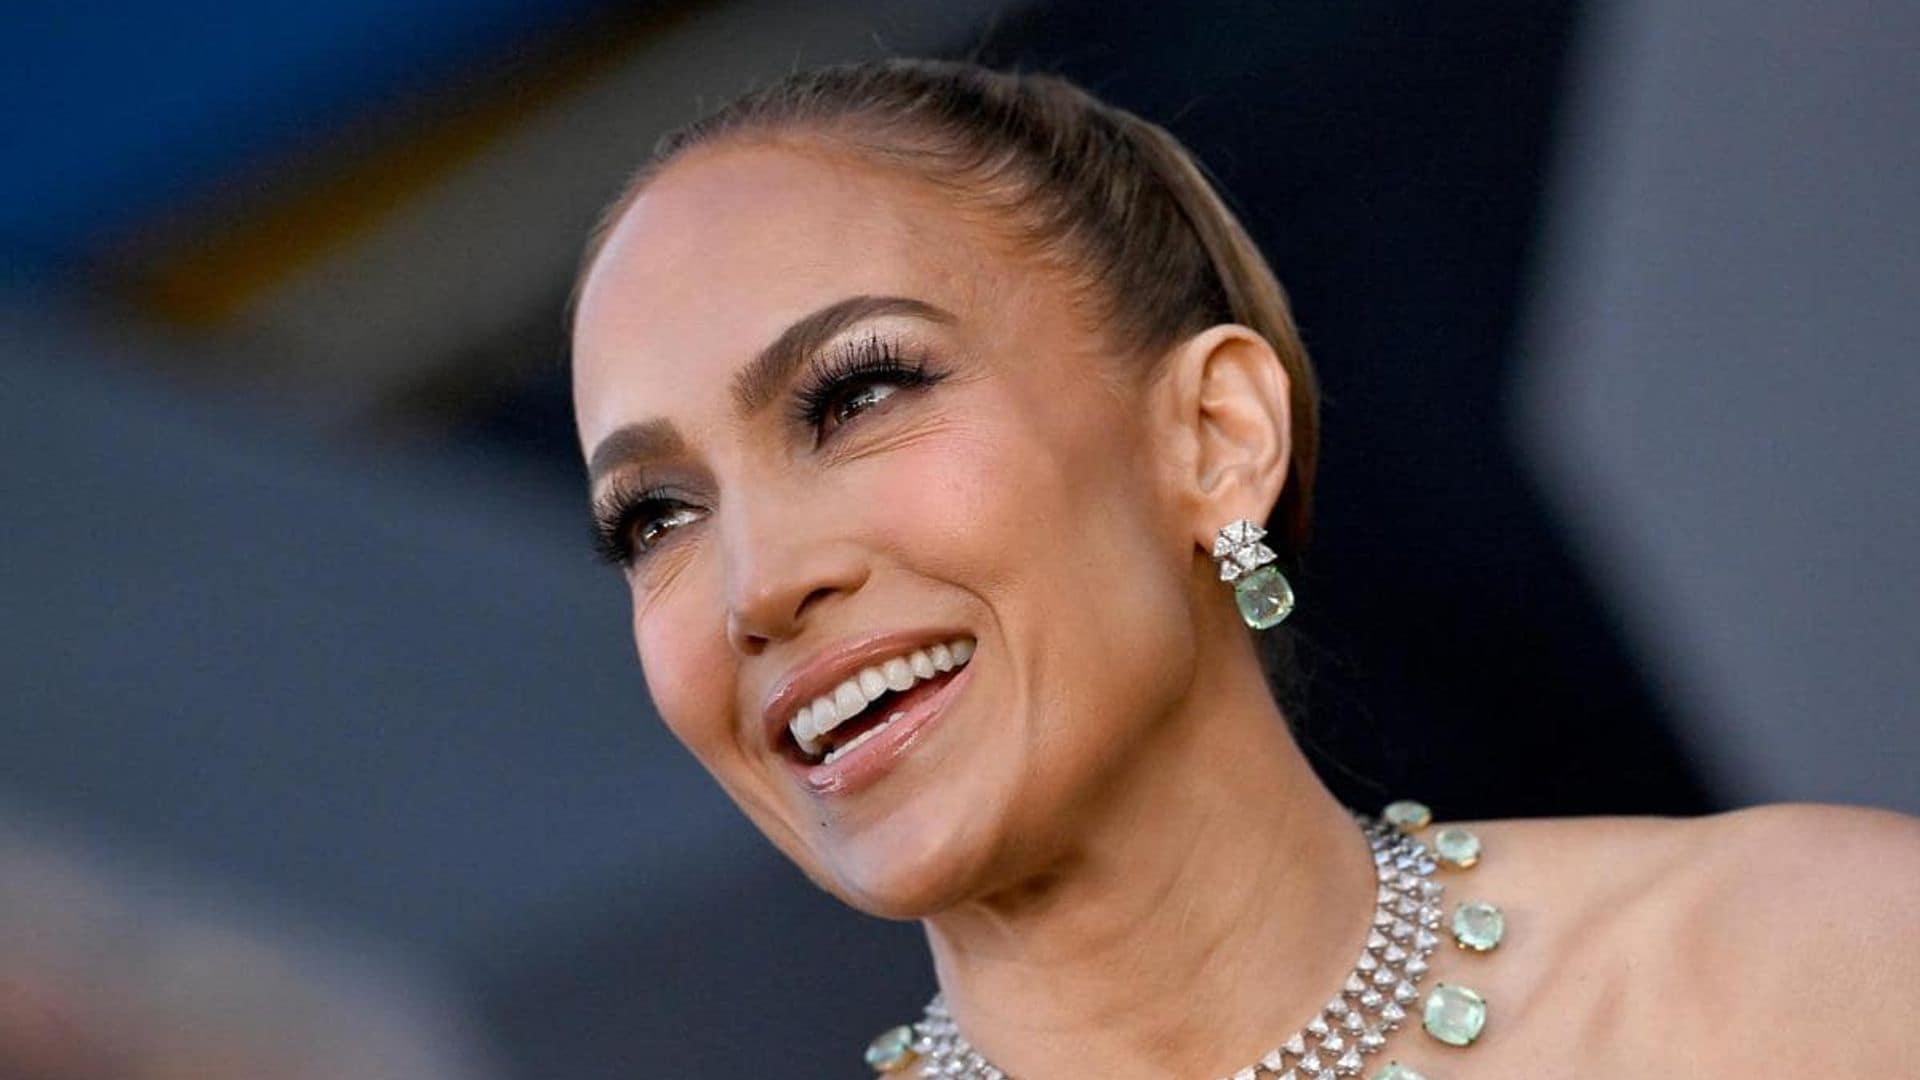 Jennifer Lopez addresses fans in heartfelt newsletter amid tour cancellation and divorce rumors